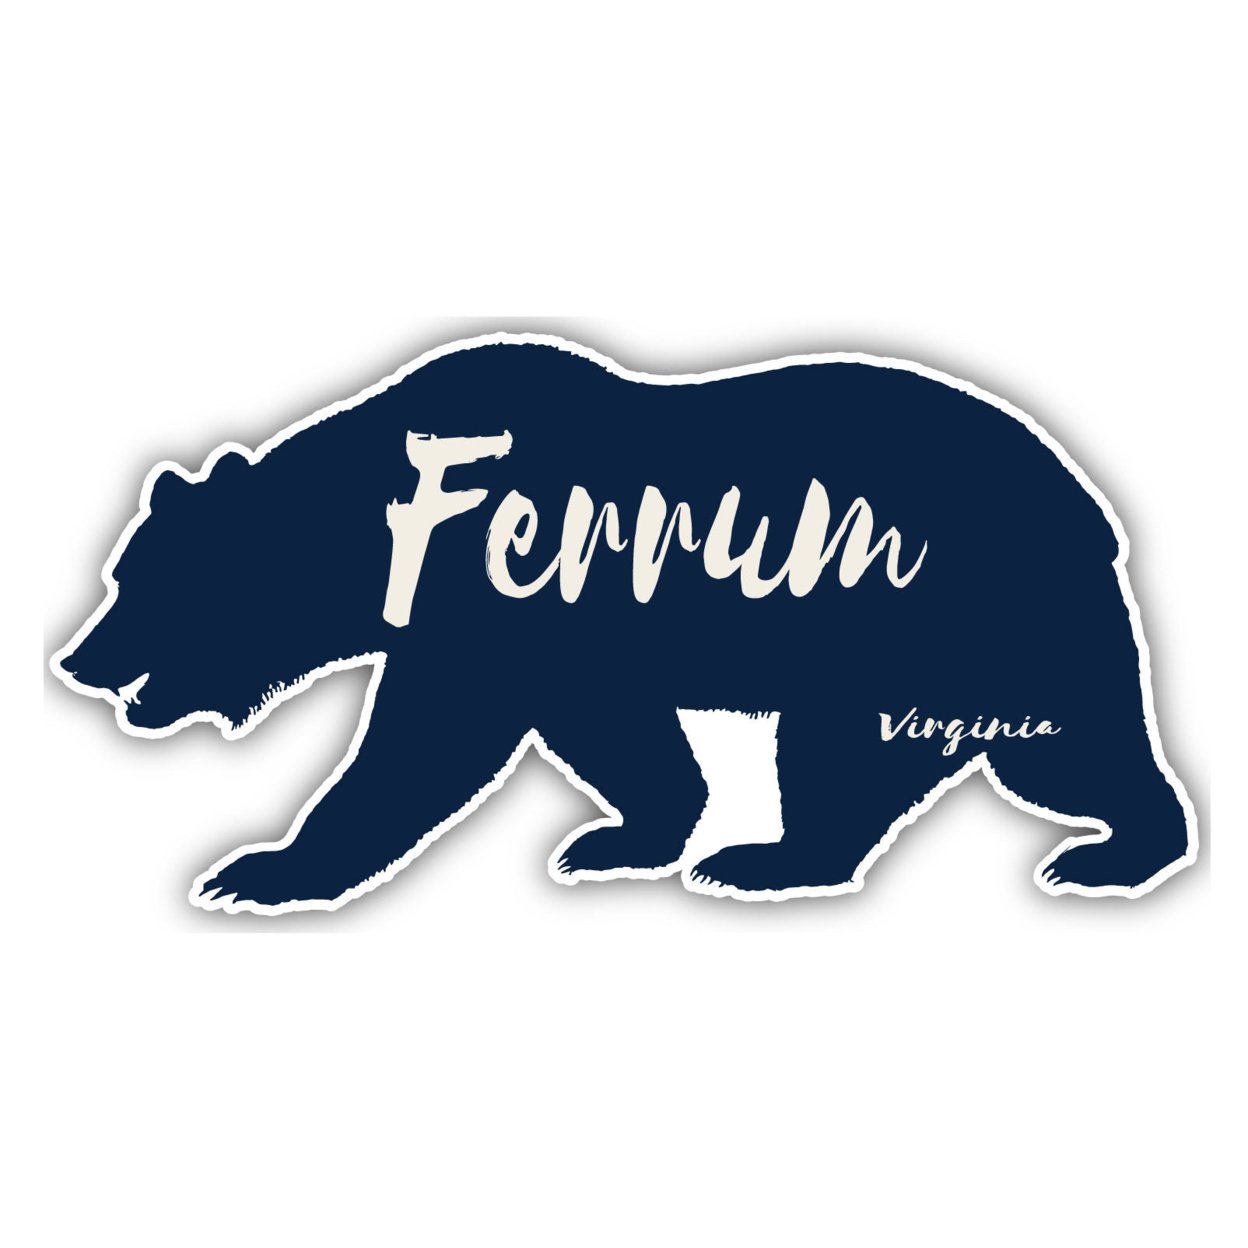 Ferrum Virginia Souvenir Decorative Stickers (Choose Theme And Size) - 4-Pack, 6-Inch, Bear